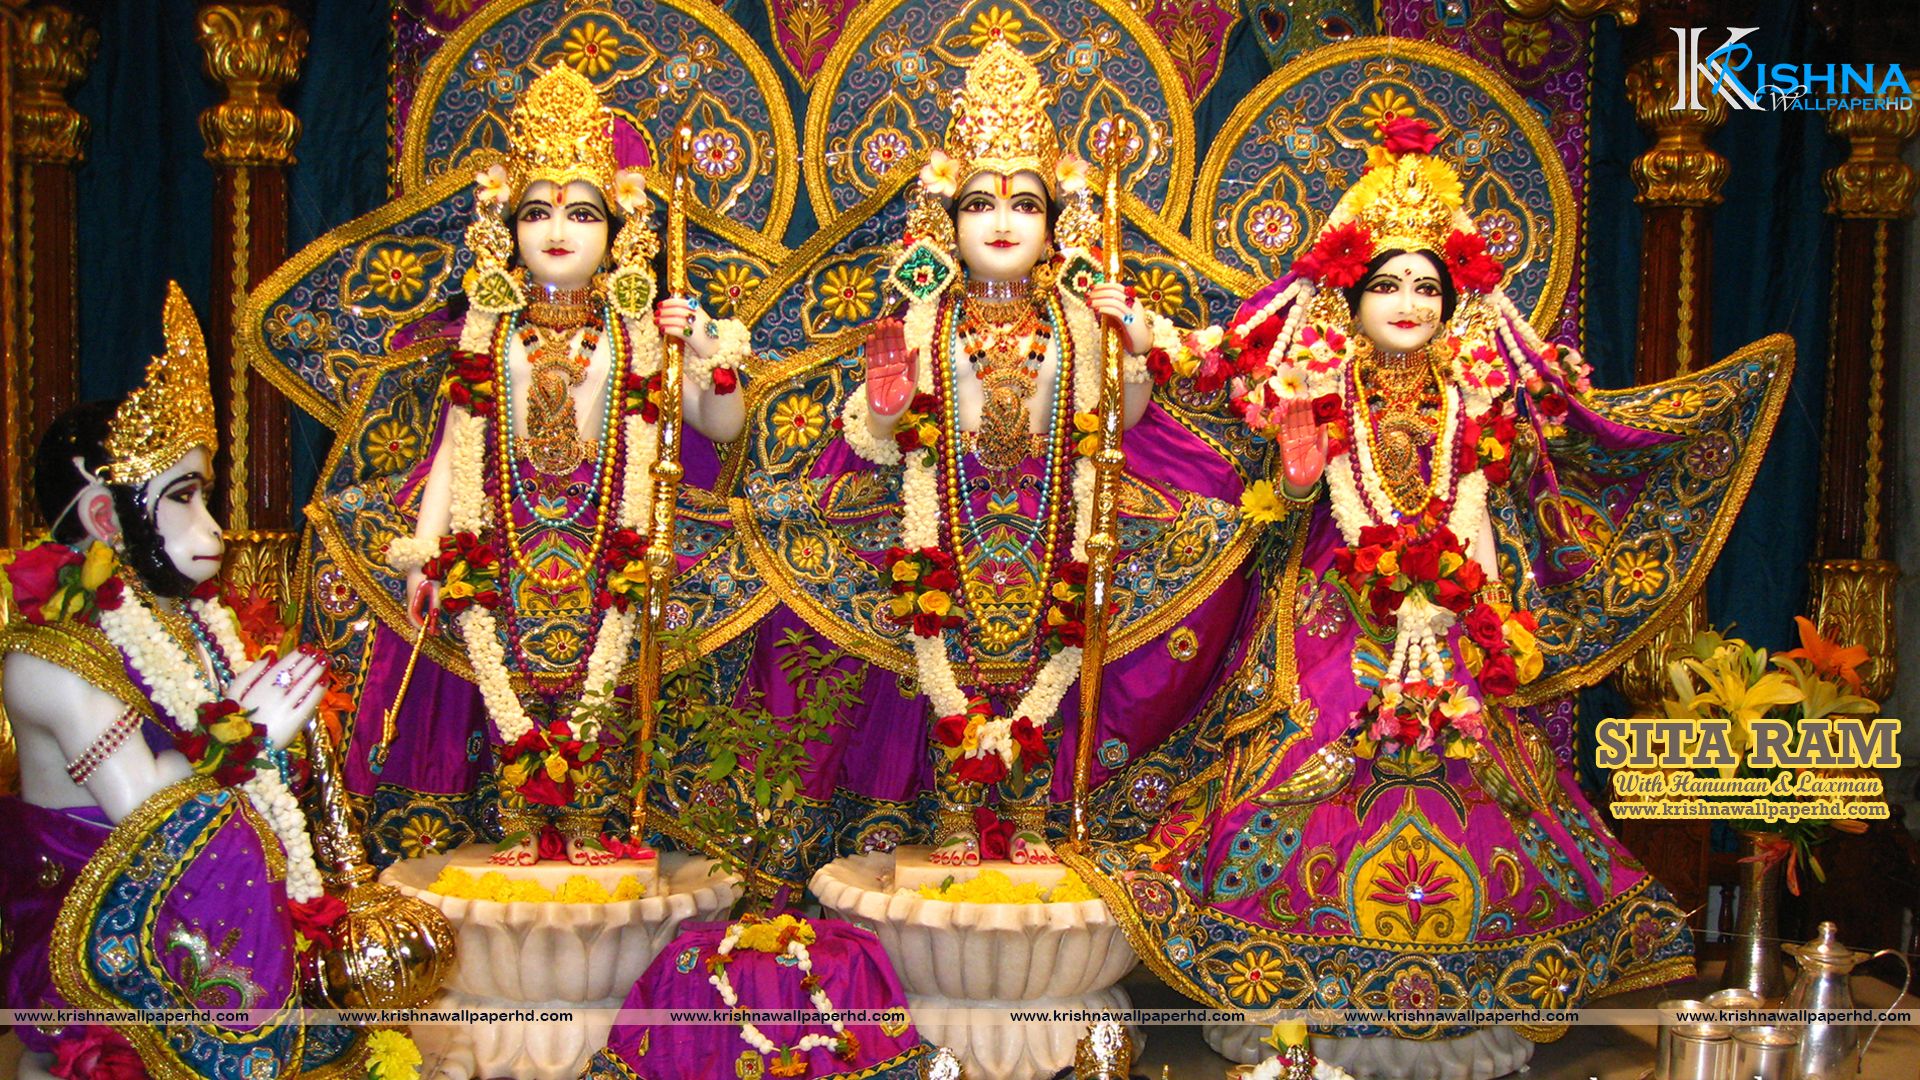 Free Download Ram Sita HD Wallpaper with Laxman and Hanuman